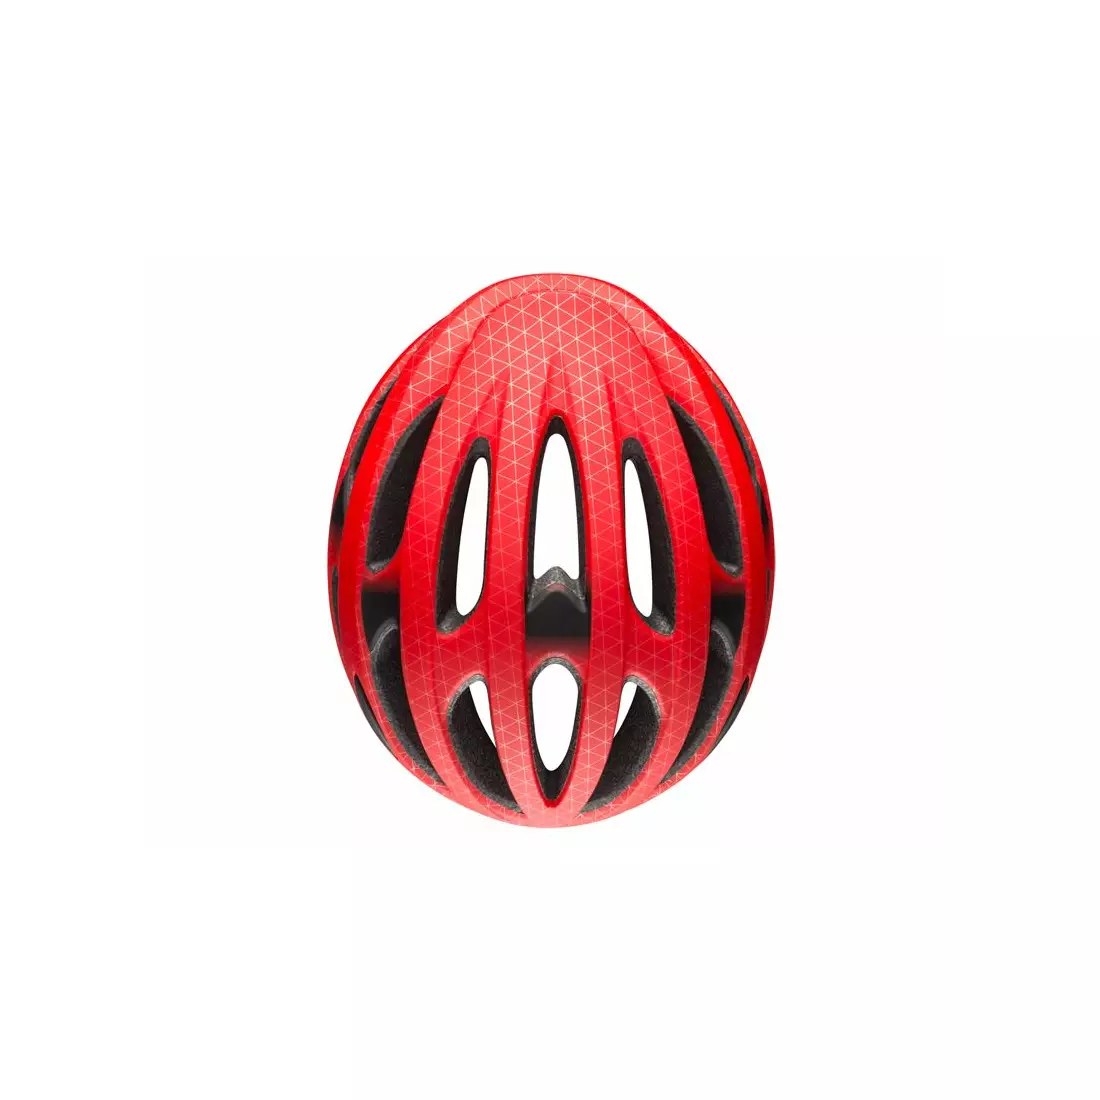 BELL FORMULA road bike helmet, matte red black